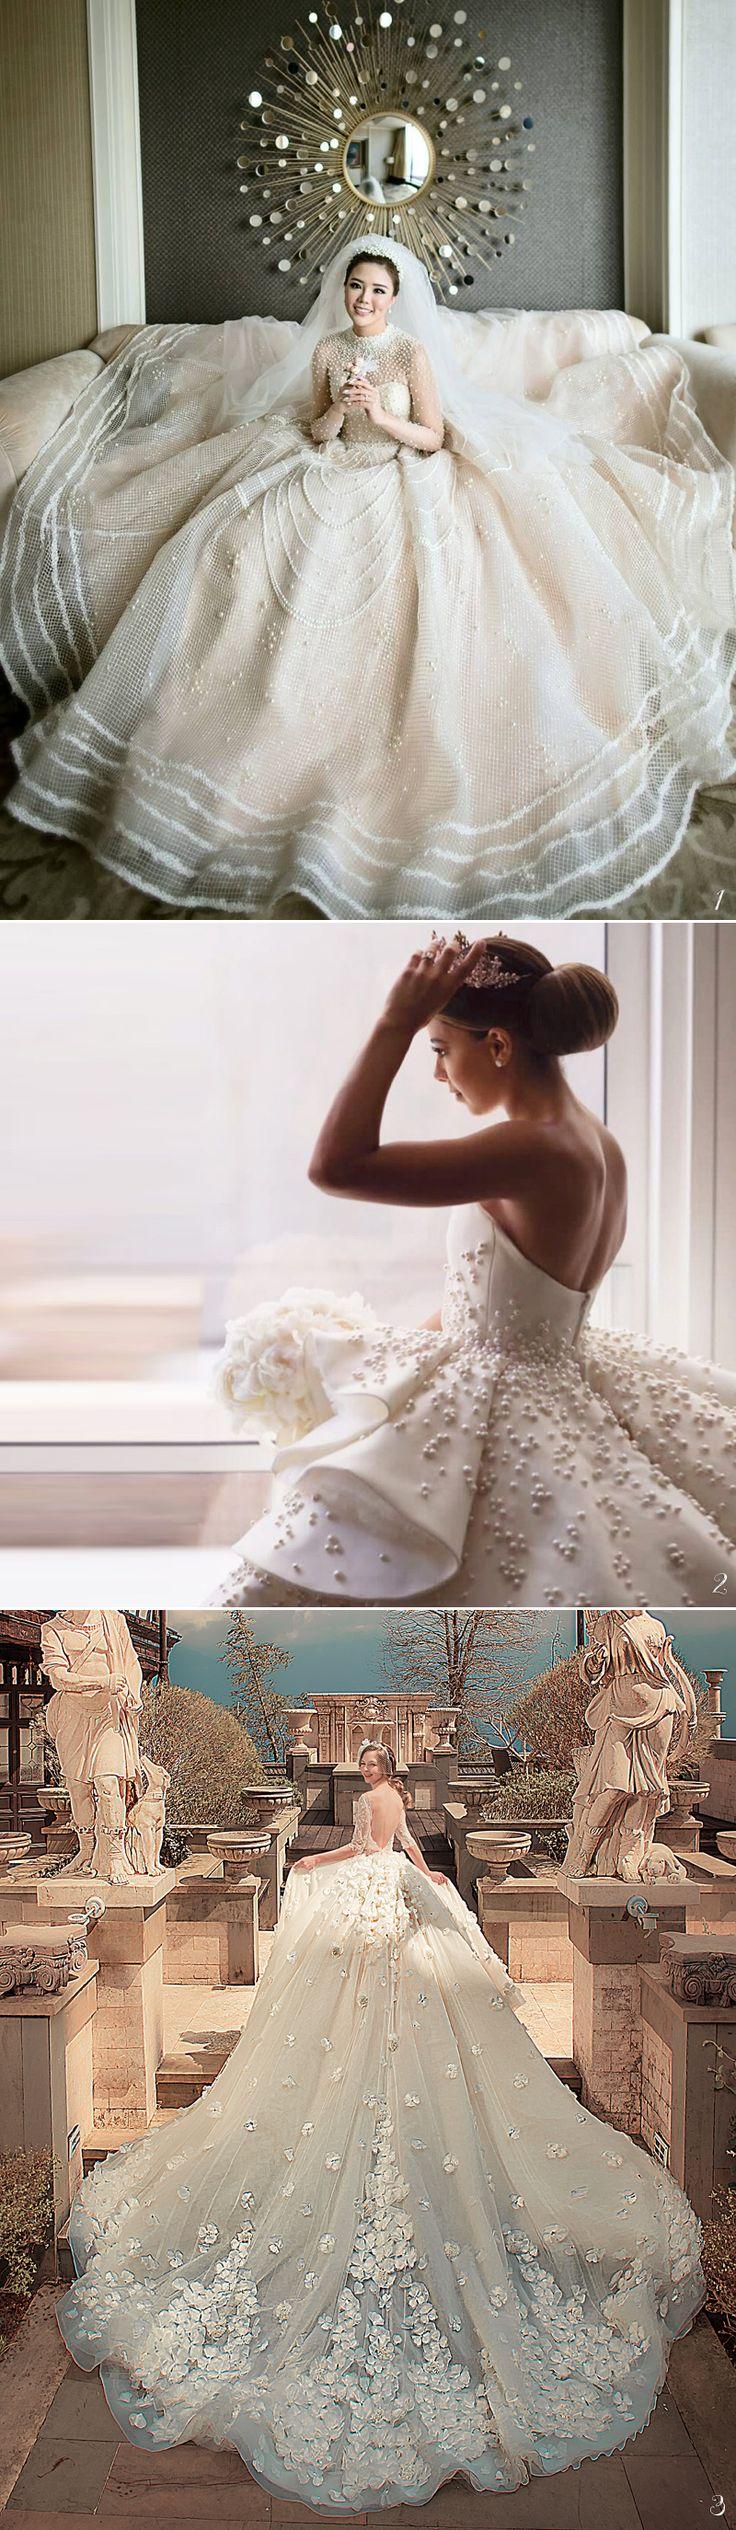 زفاف - 17 Beautiful Wedding Dresses That Evoke Timeless Glamour!